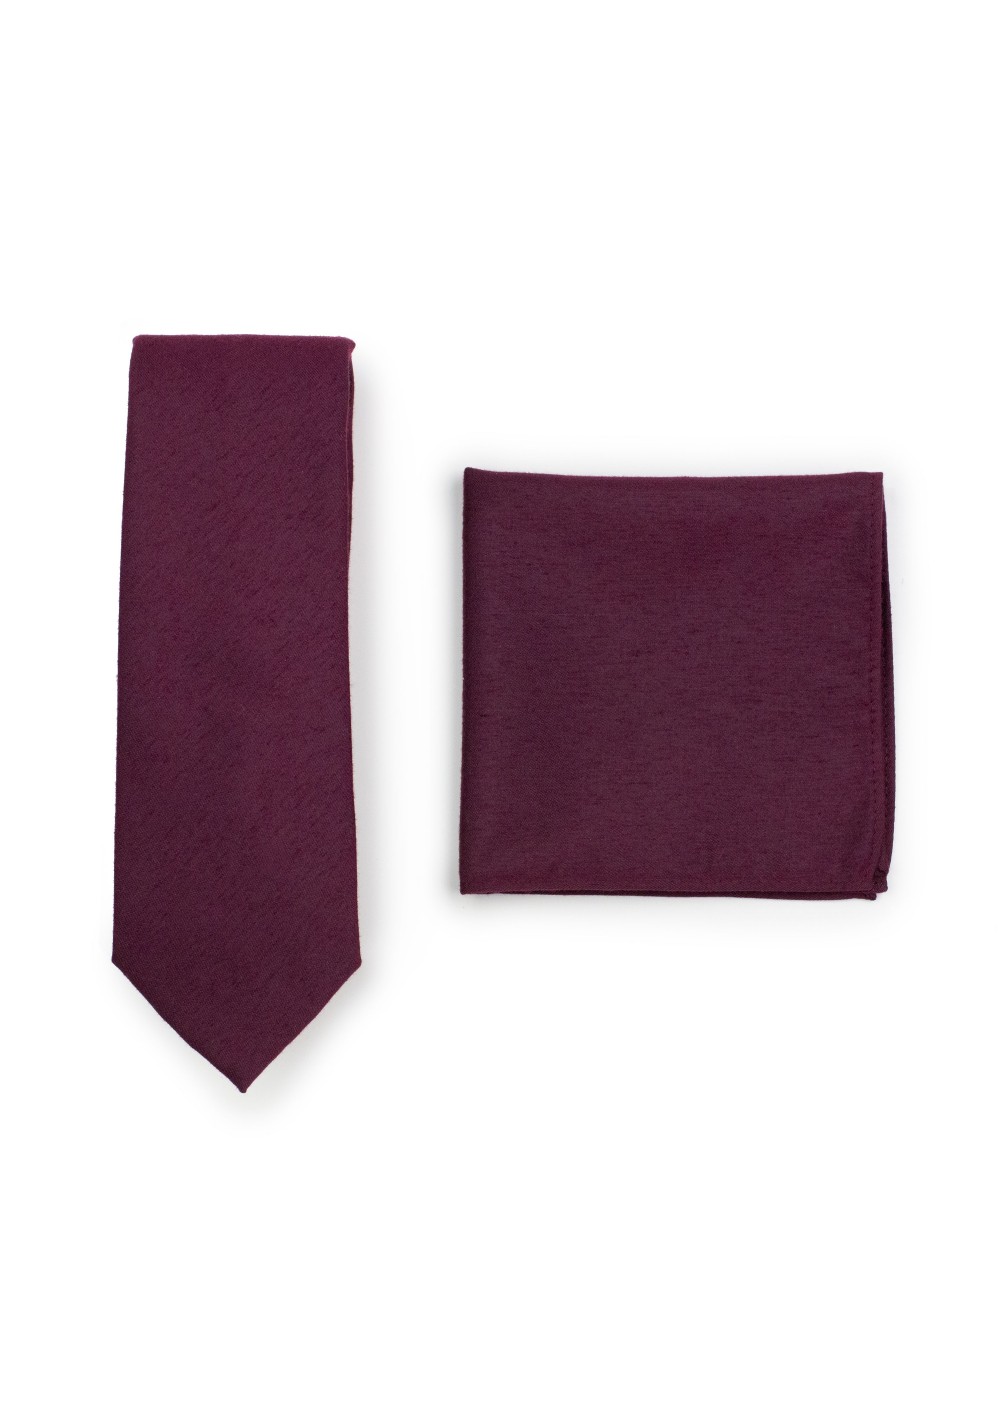 Burgundy Skinny Tie Set